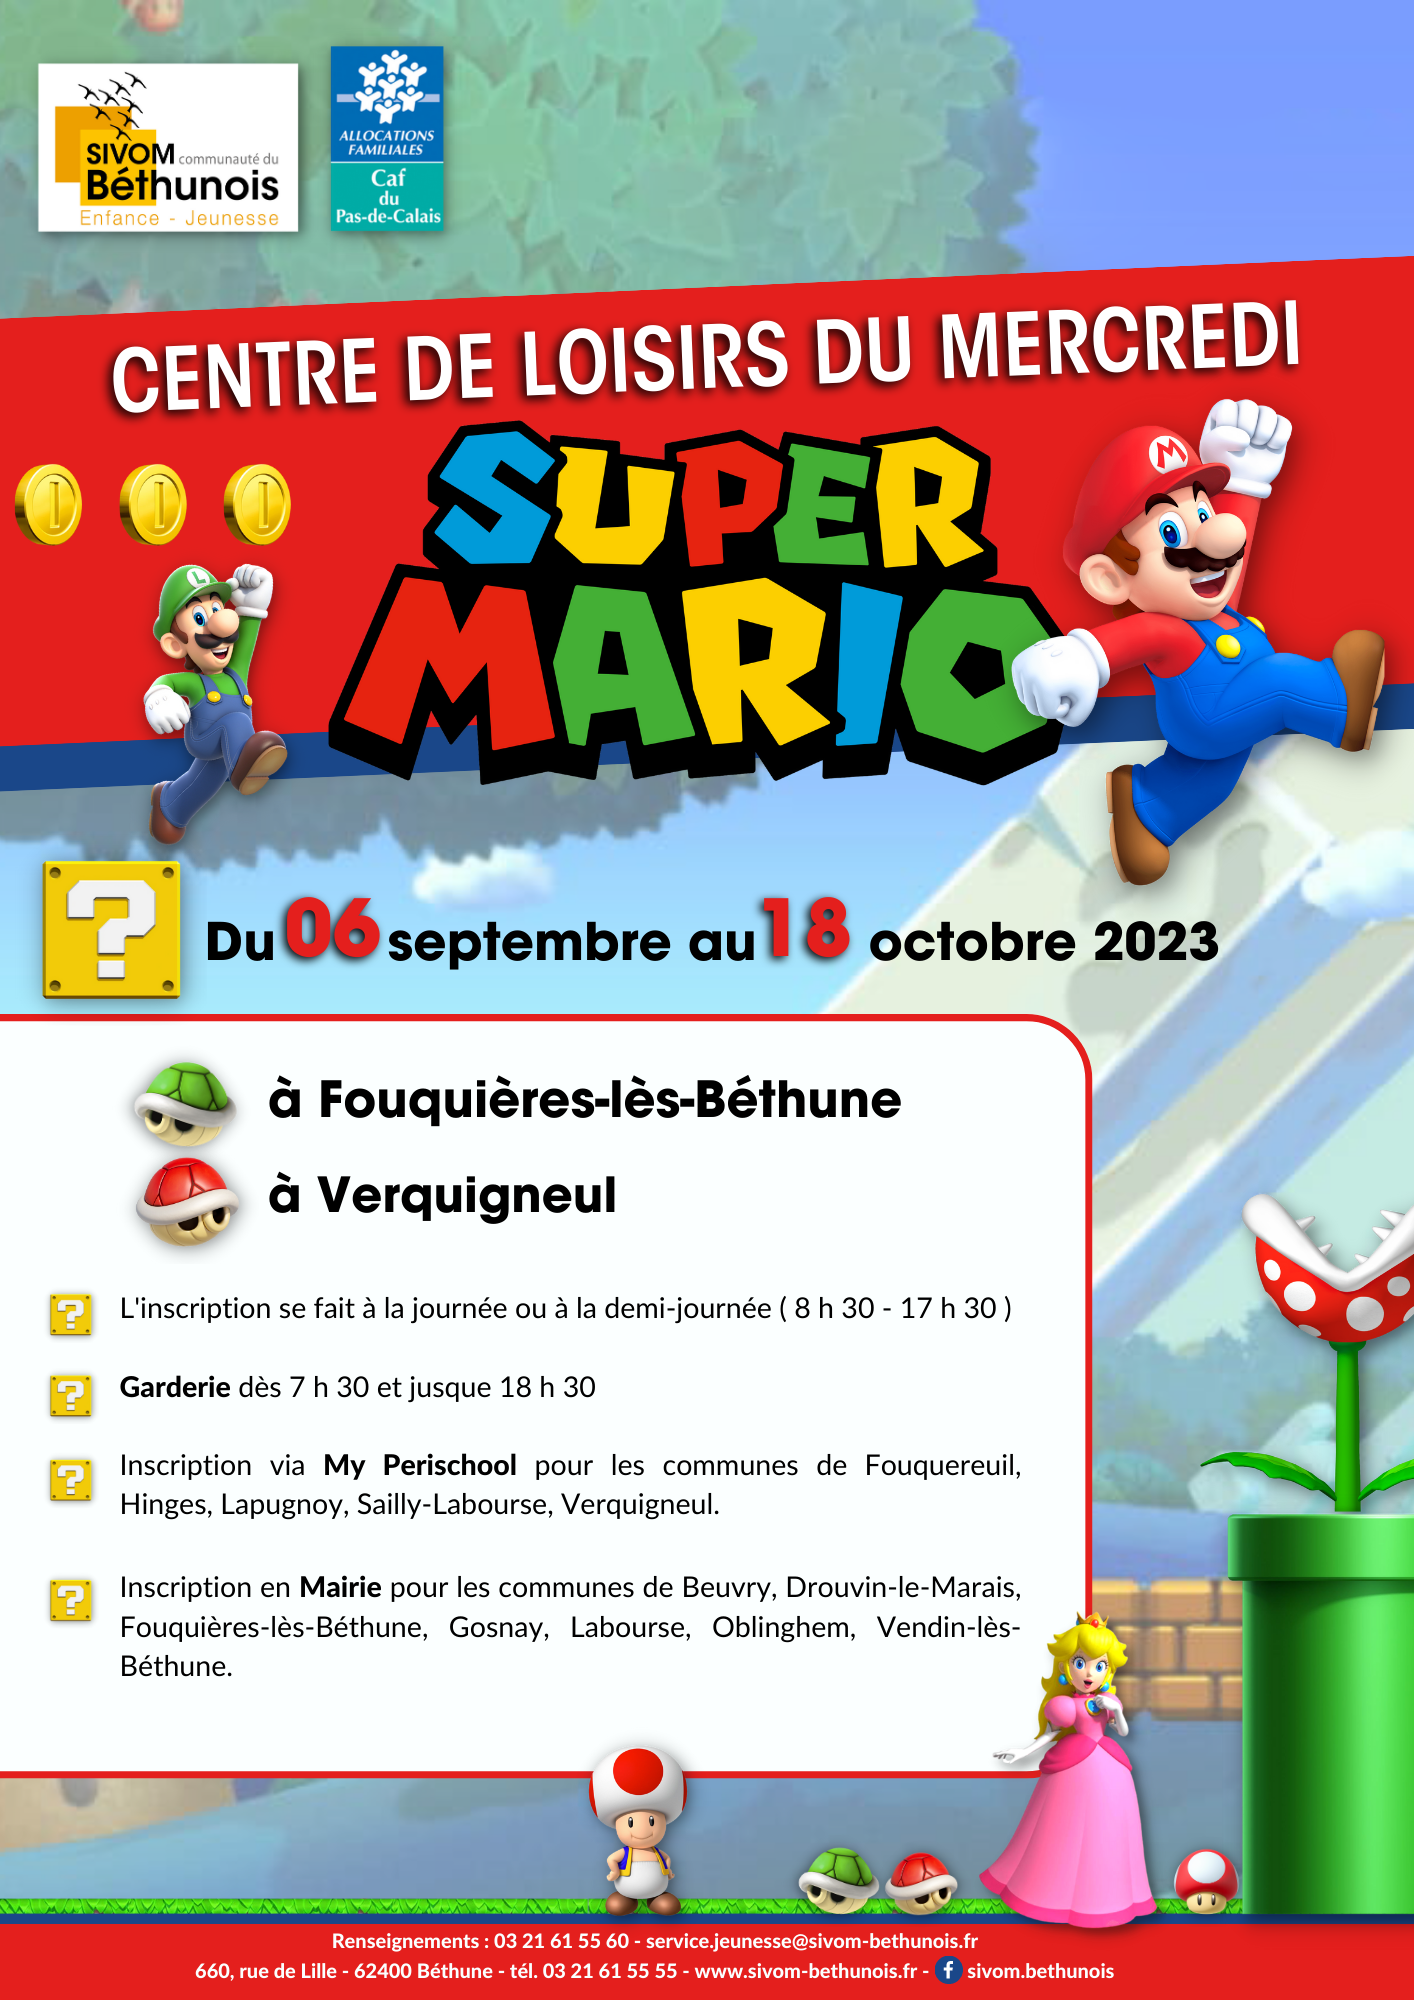 Centre de loisirs du mercredi - Super Mario